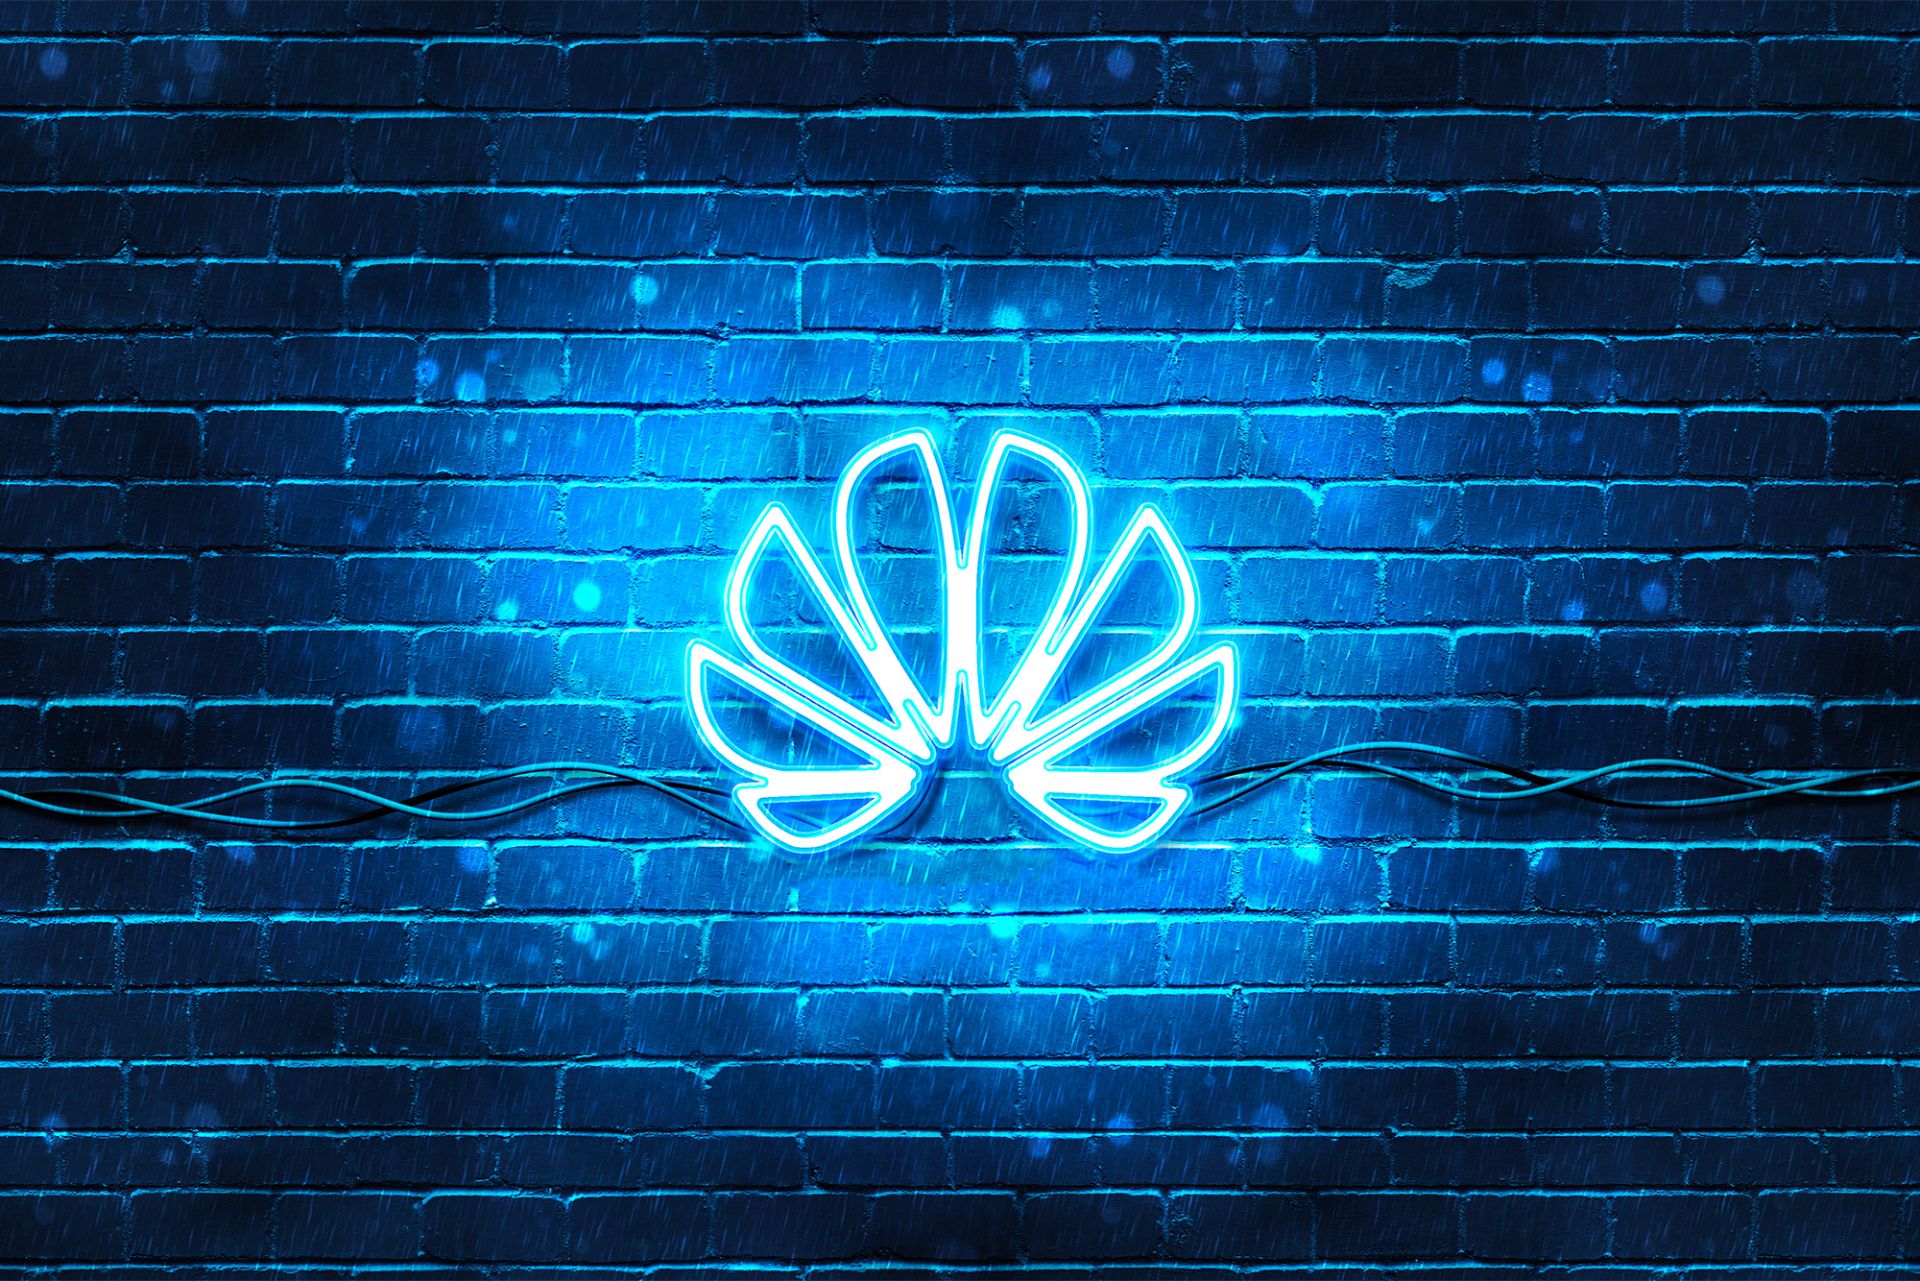 لوگو هواوی / Huawei Logo روی دیوار